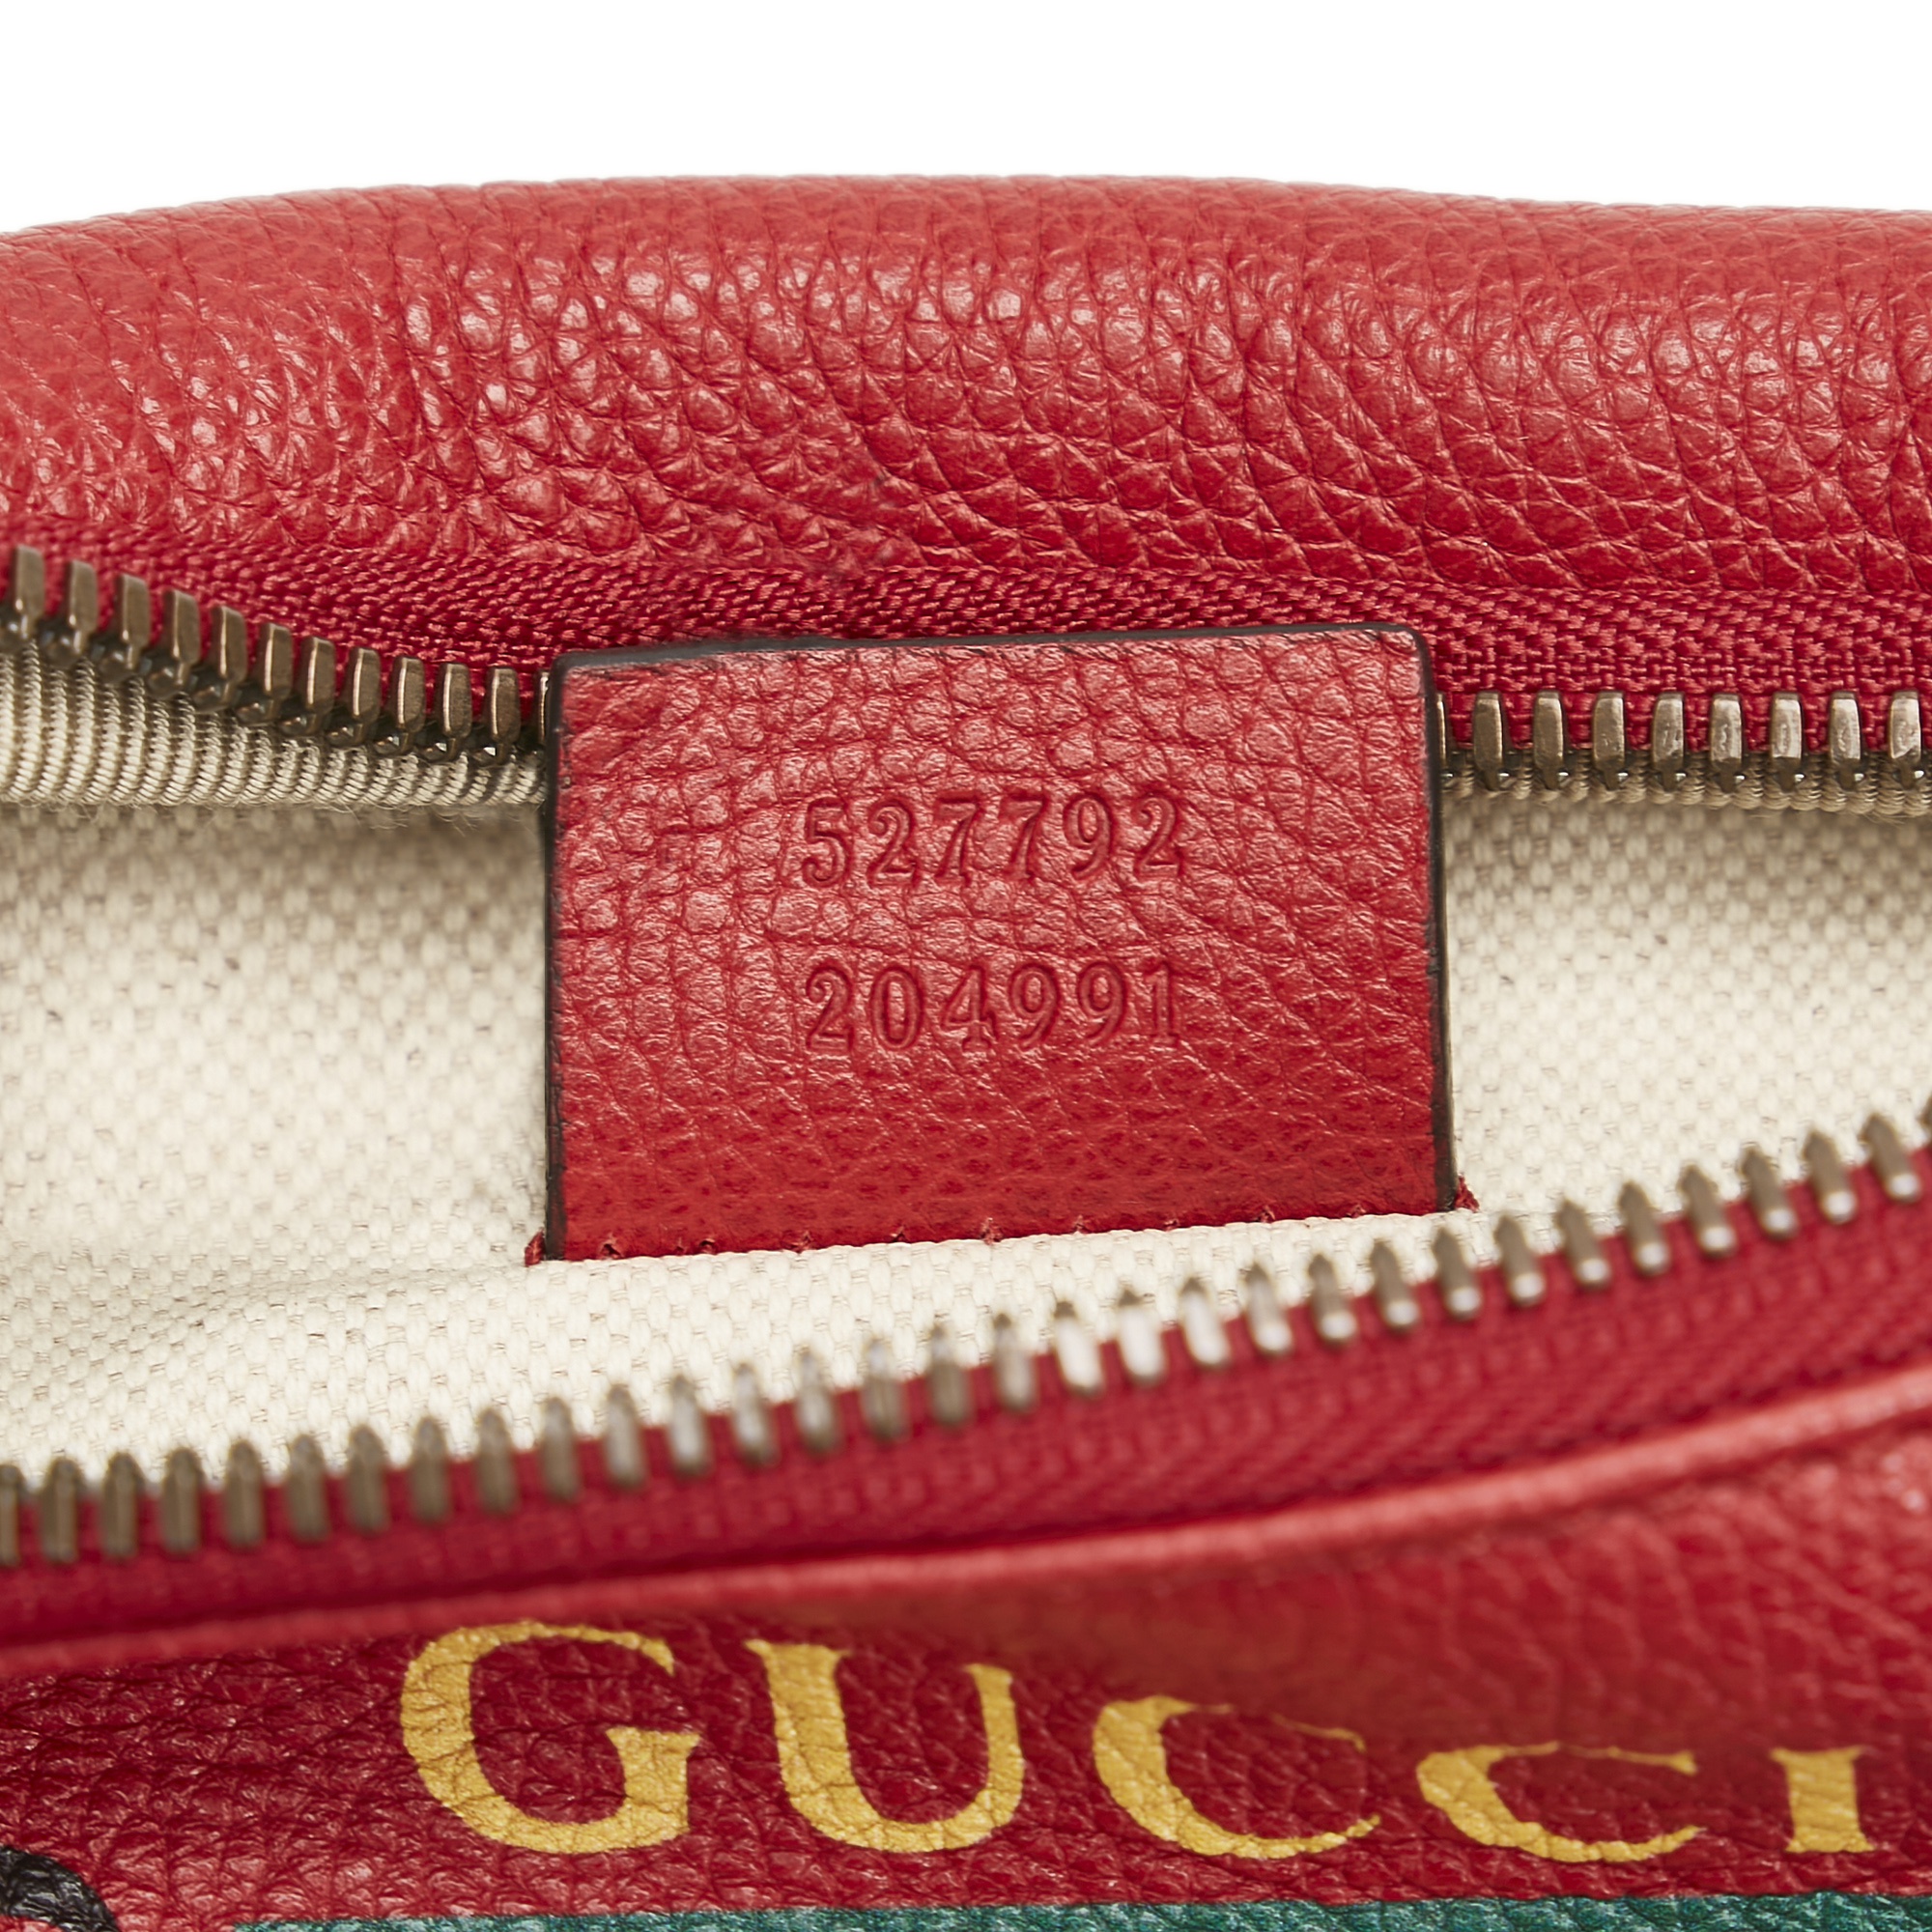 Gucci Gucci Logo Belt Bag - Image 7 of 11